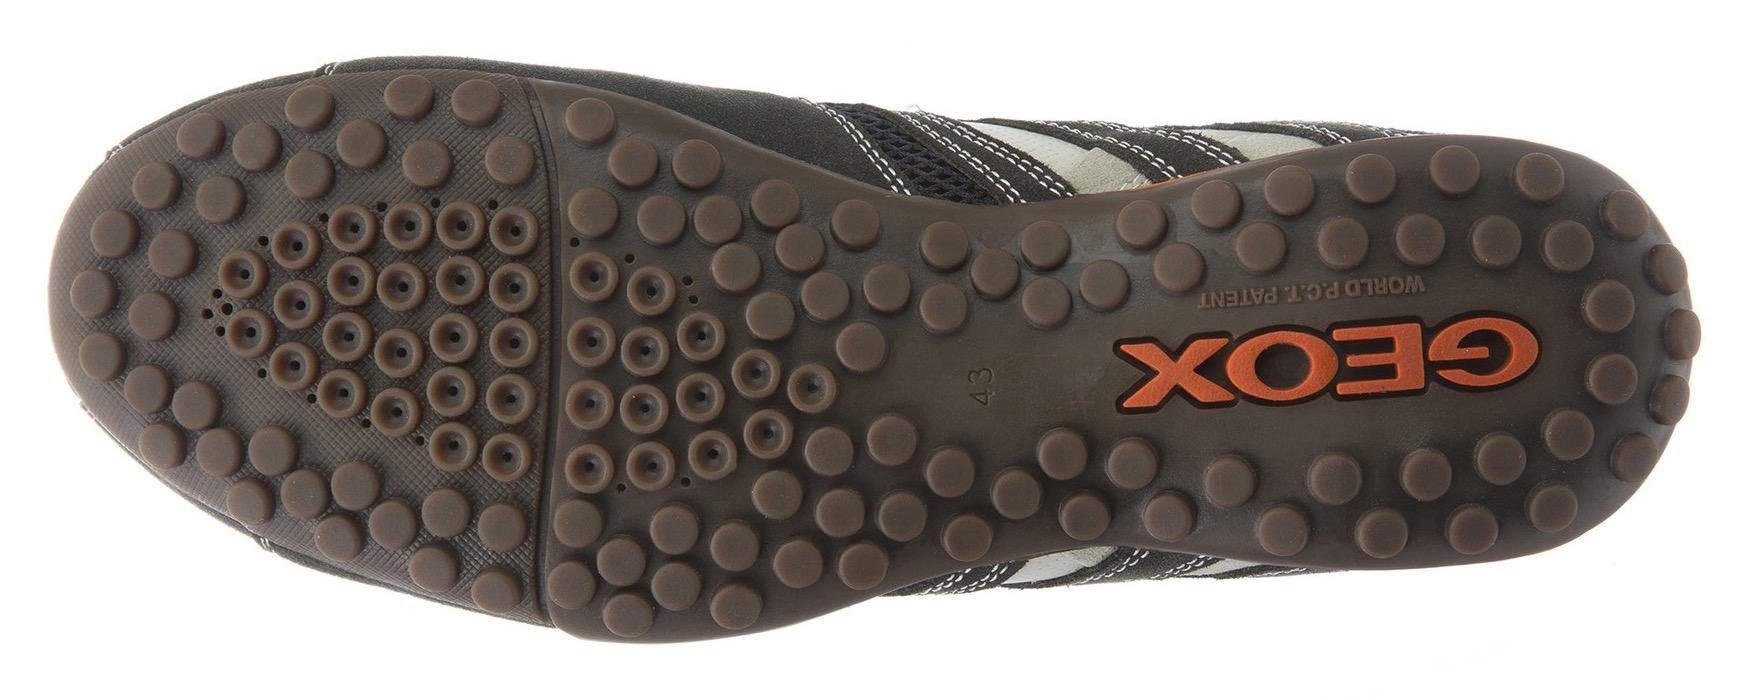 Snake dunkelgrau mit Geox Spezial Materialmix Geox Membrane im Sneaker